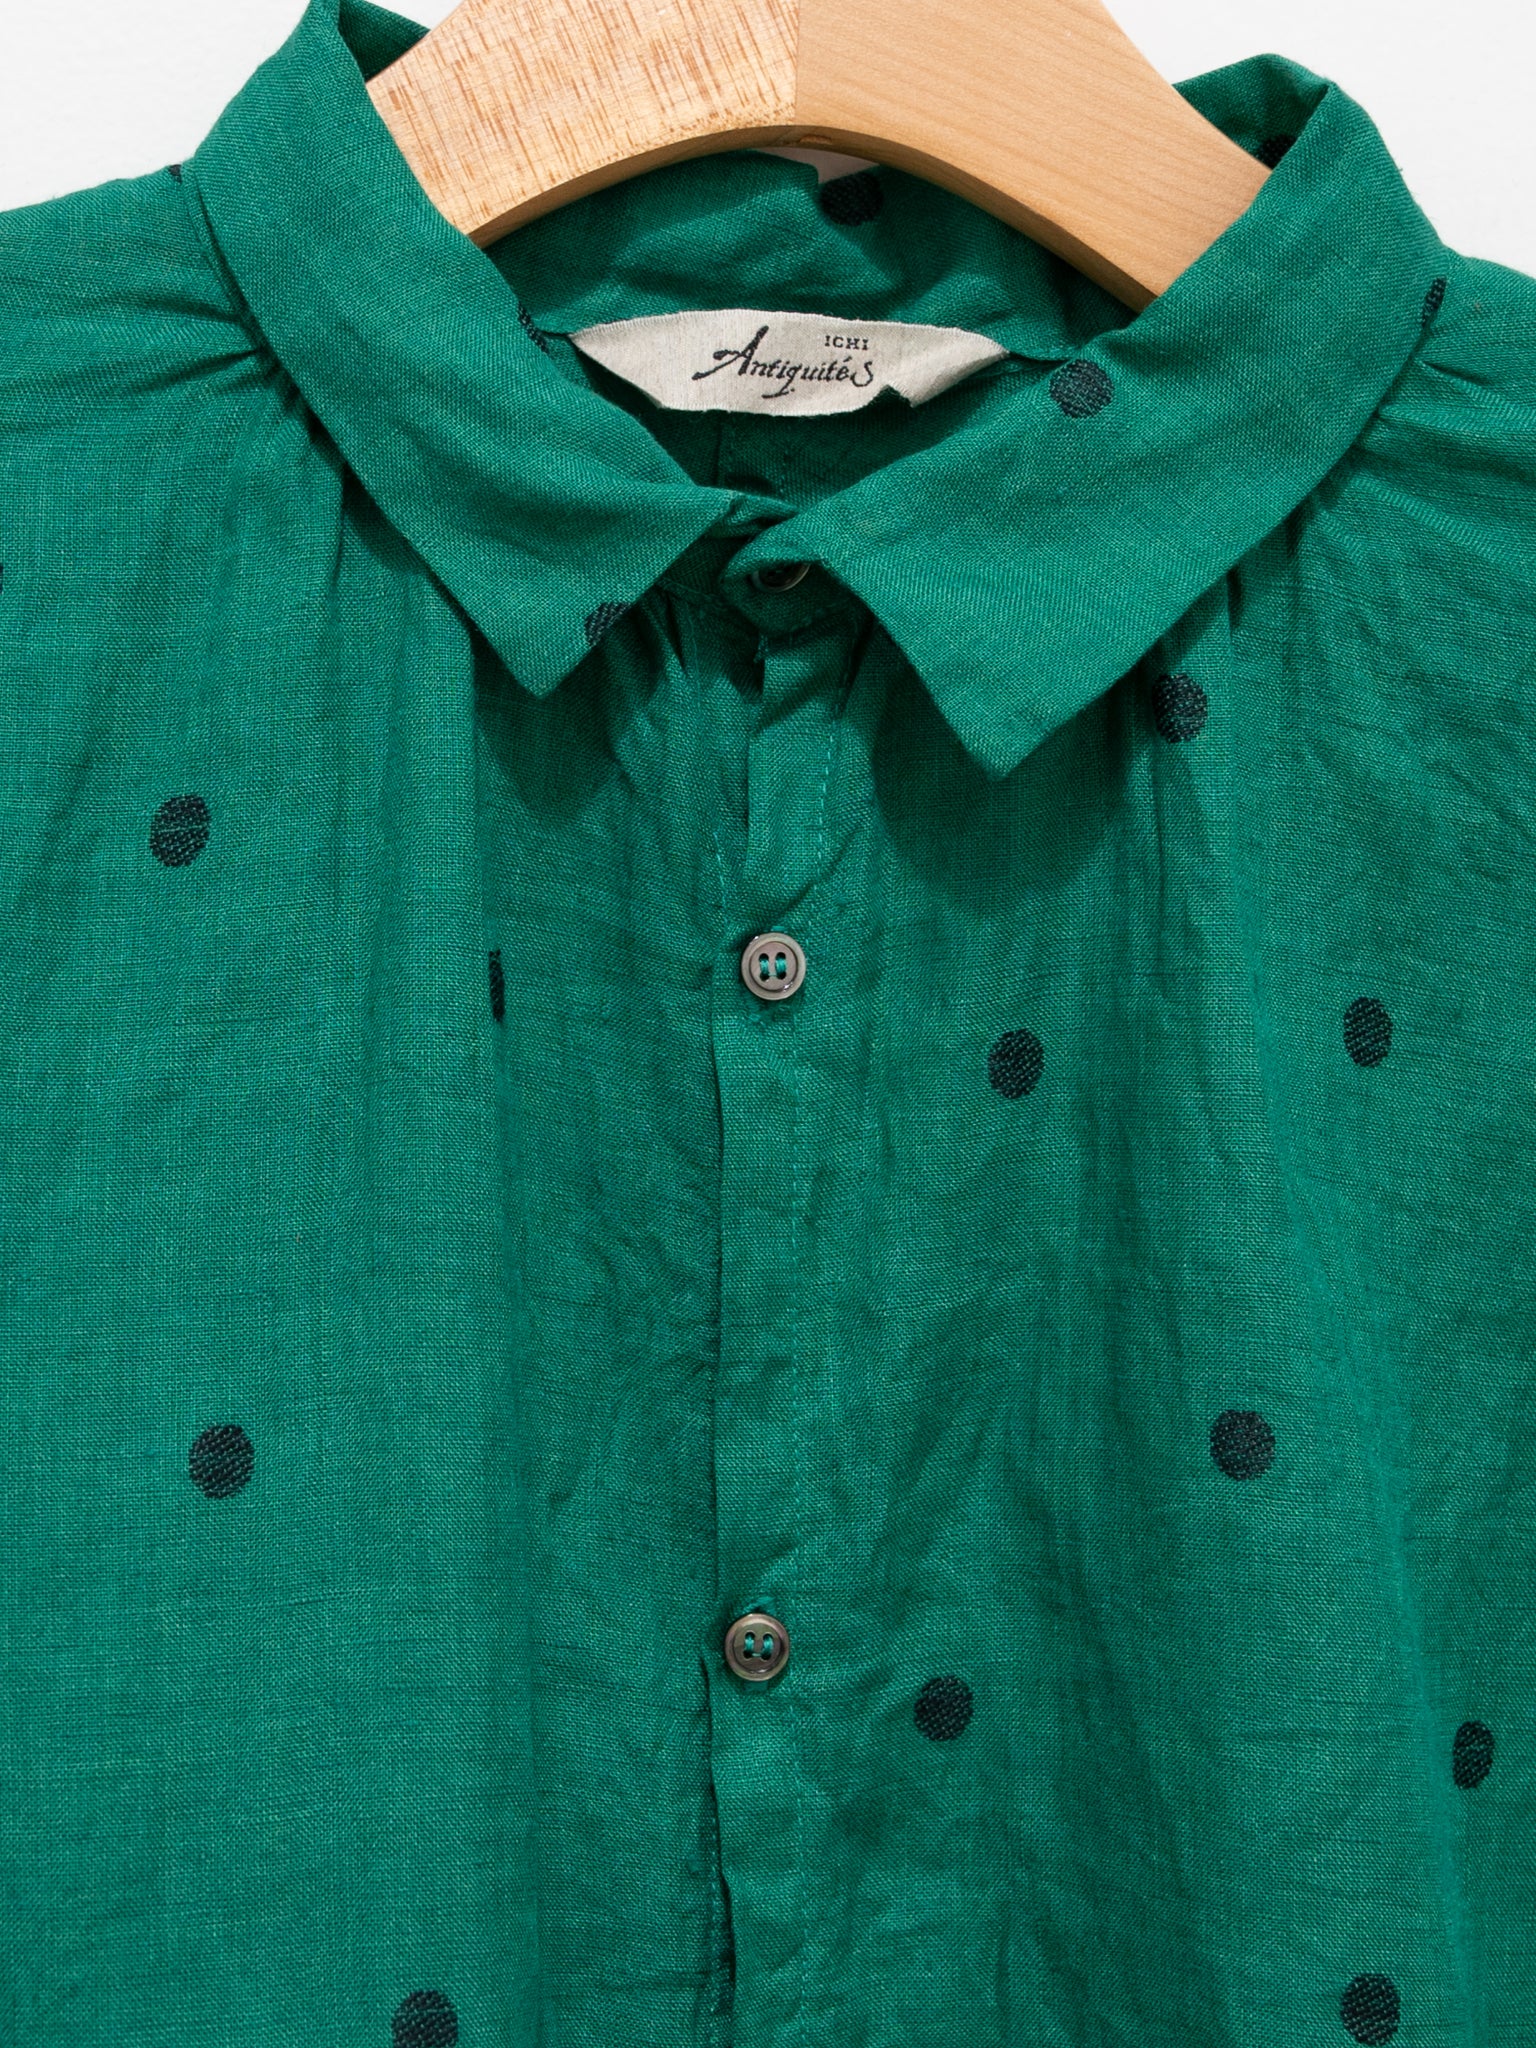 Namu Shop - Ichi Antiquites Linen Dot Shirt - Green x Black